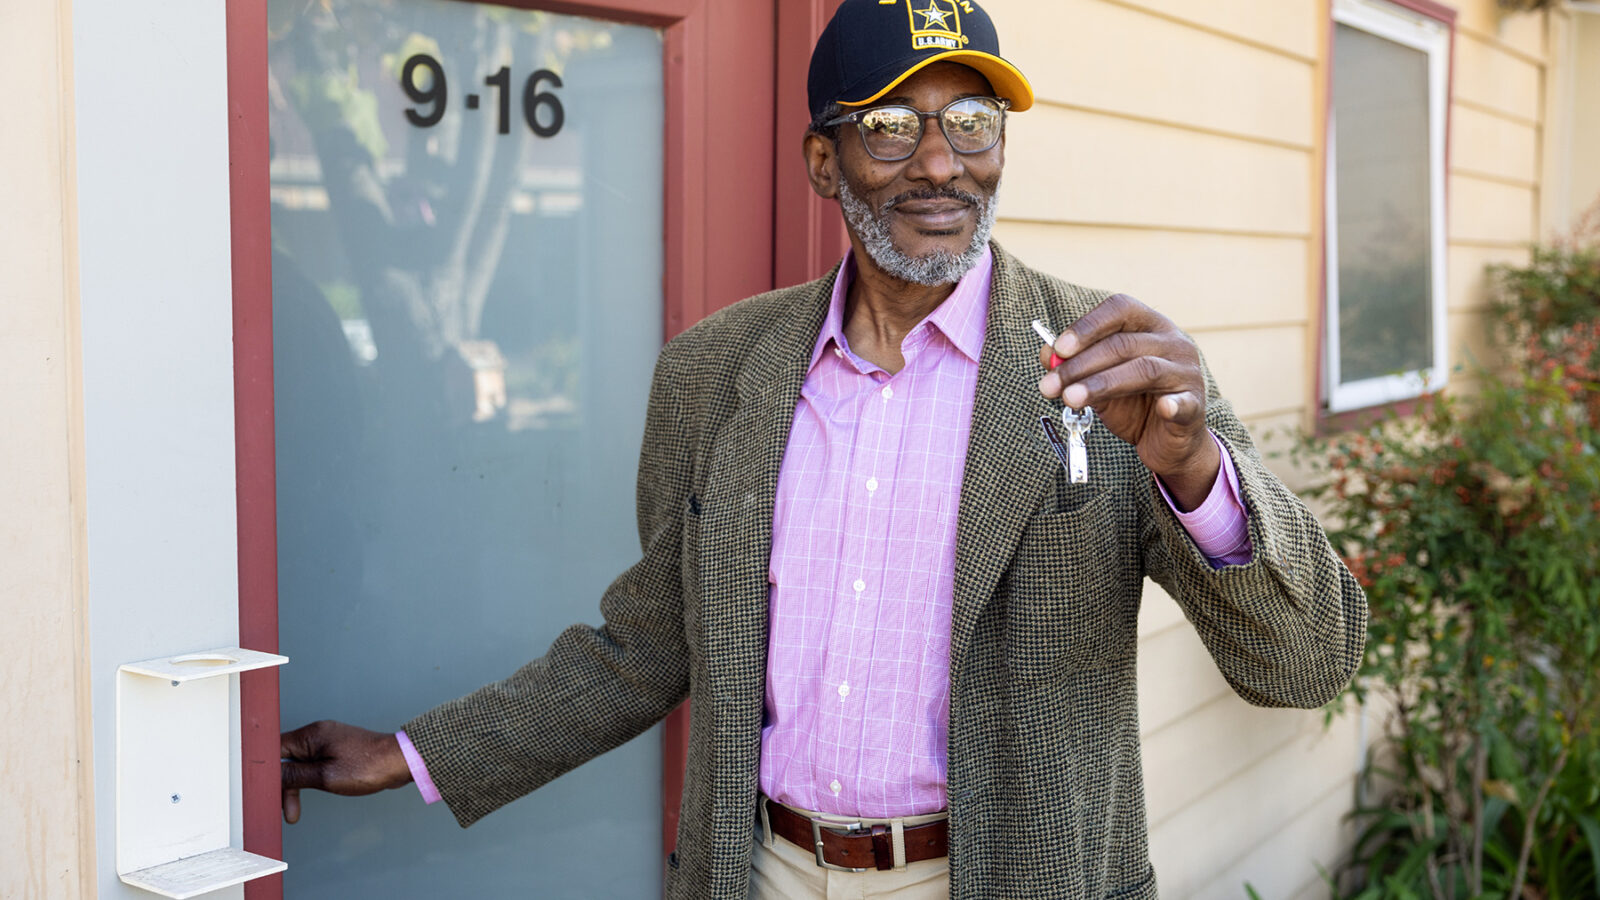 a veteran stands in front of a door showing his key